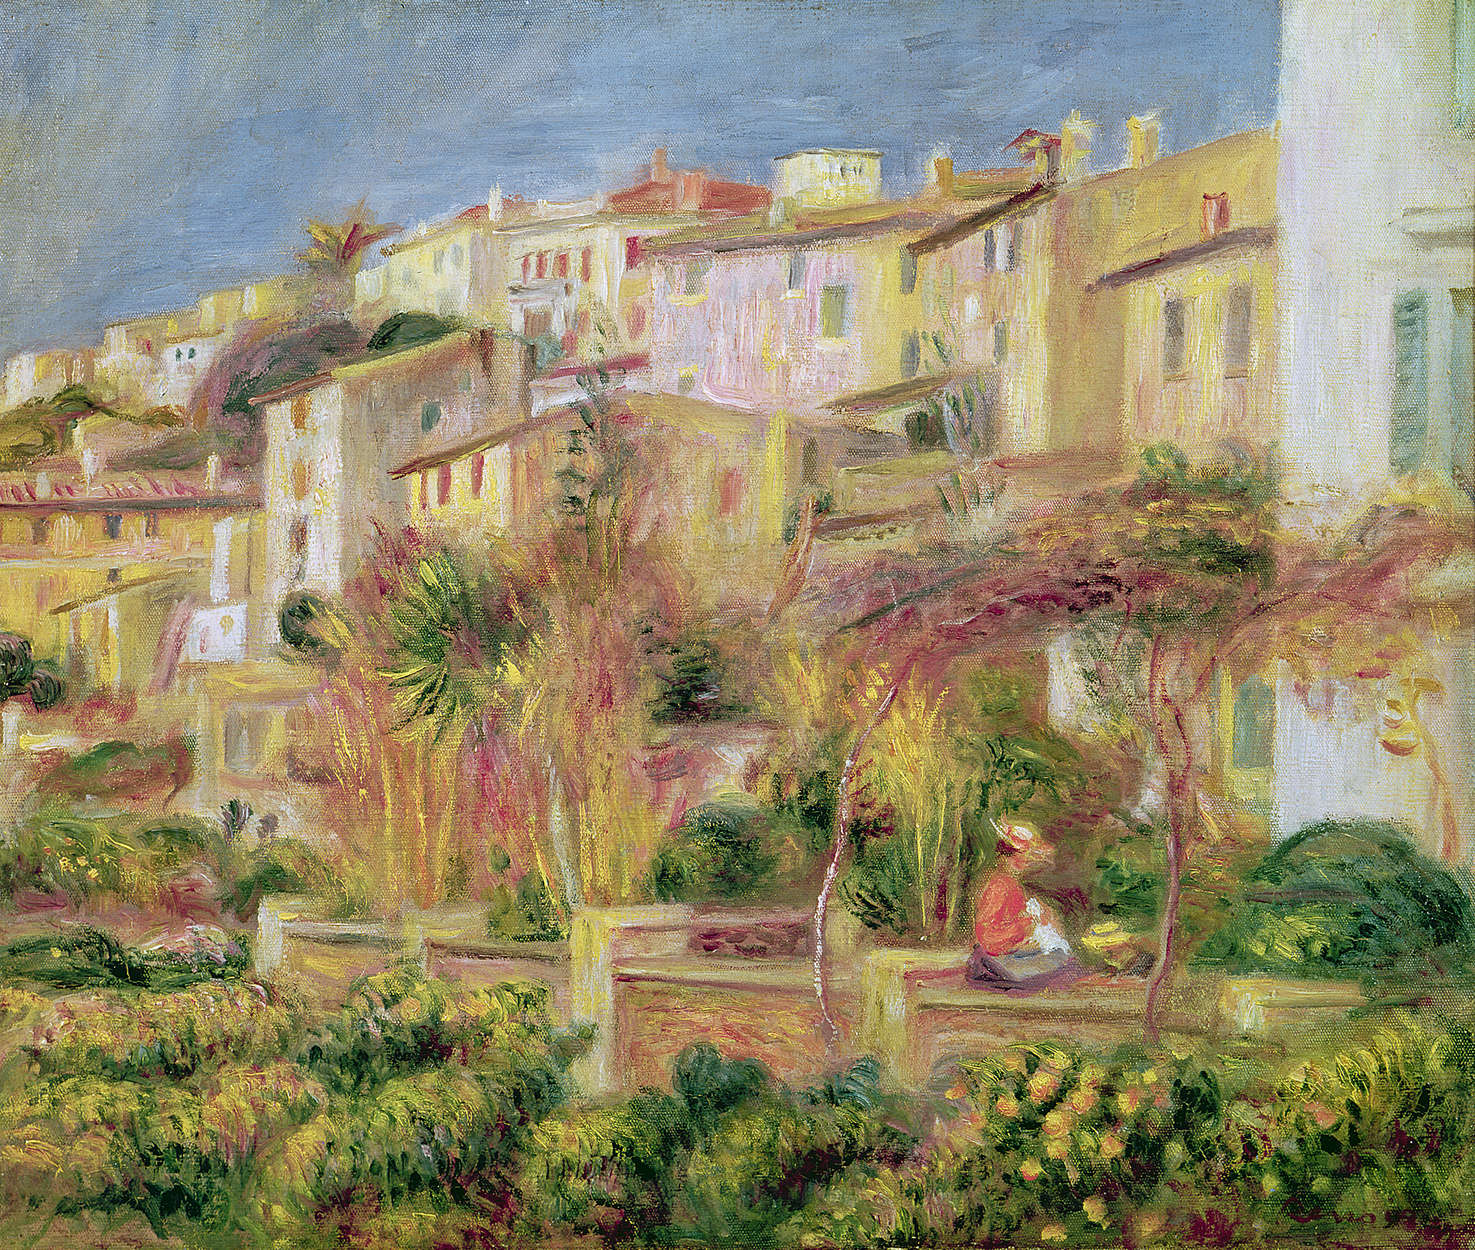             Mural "Terraza en Cagnes" de Pierre Auguste Renoir
        